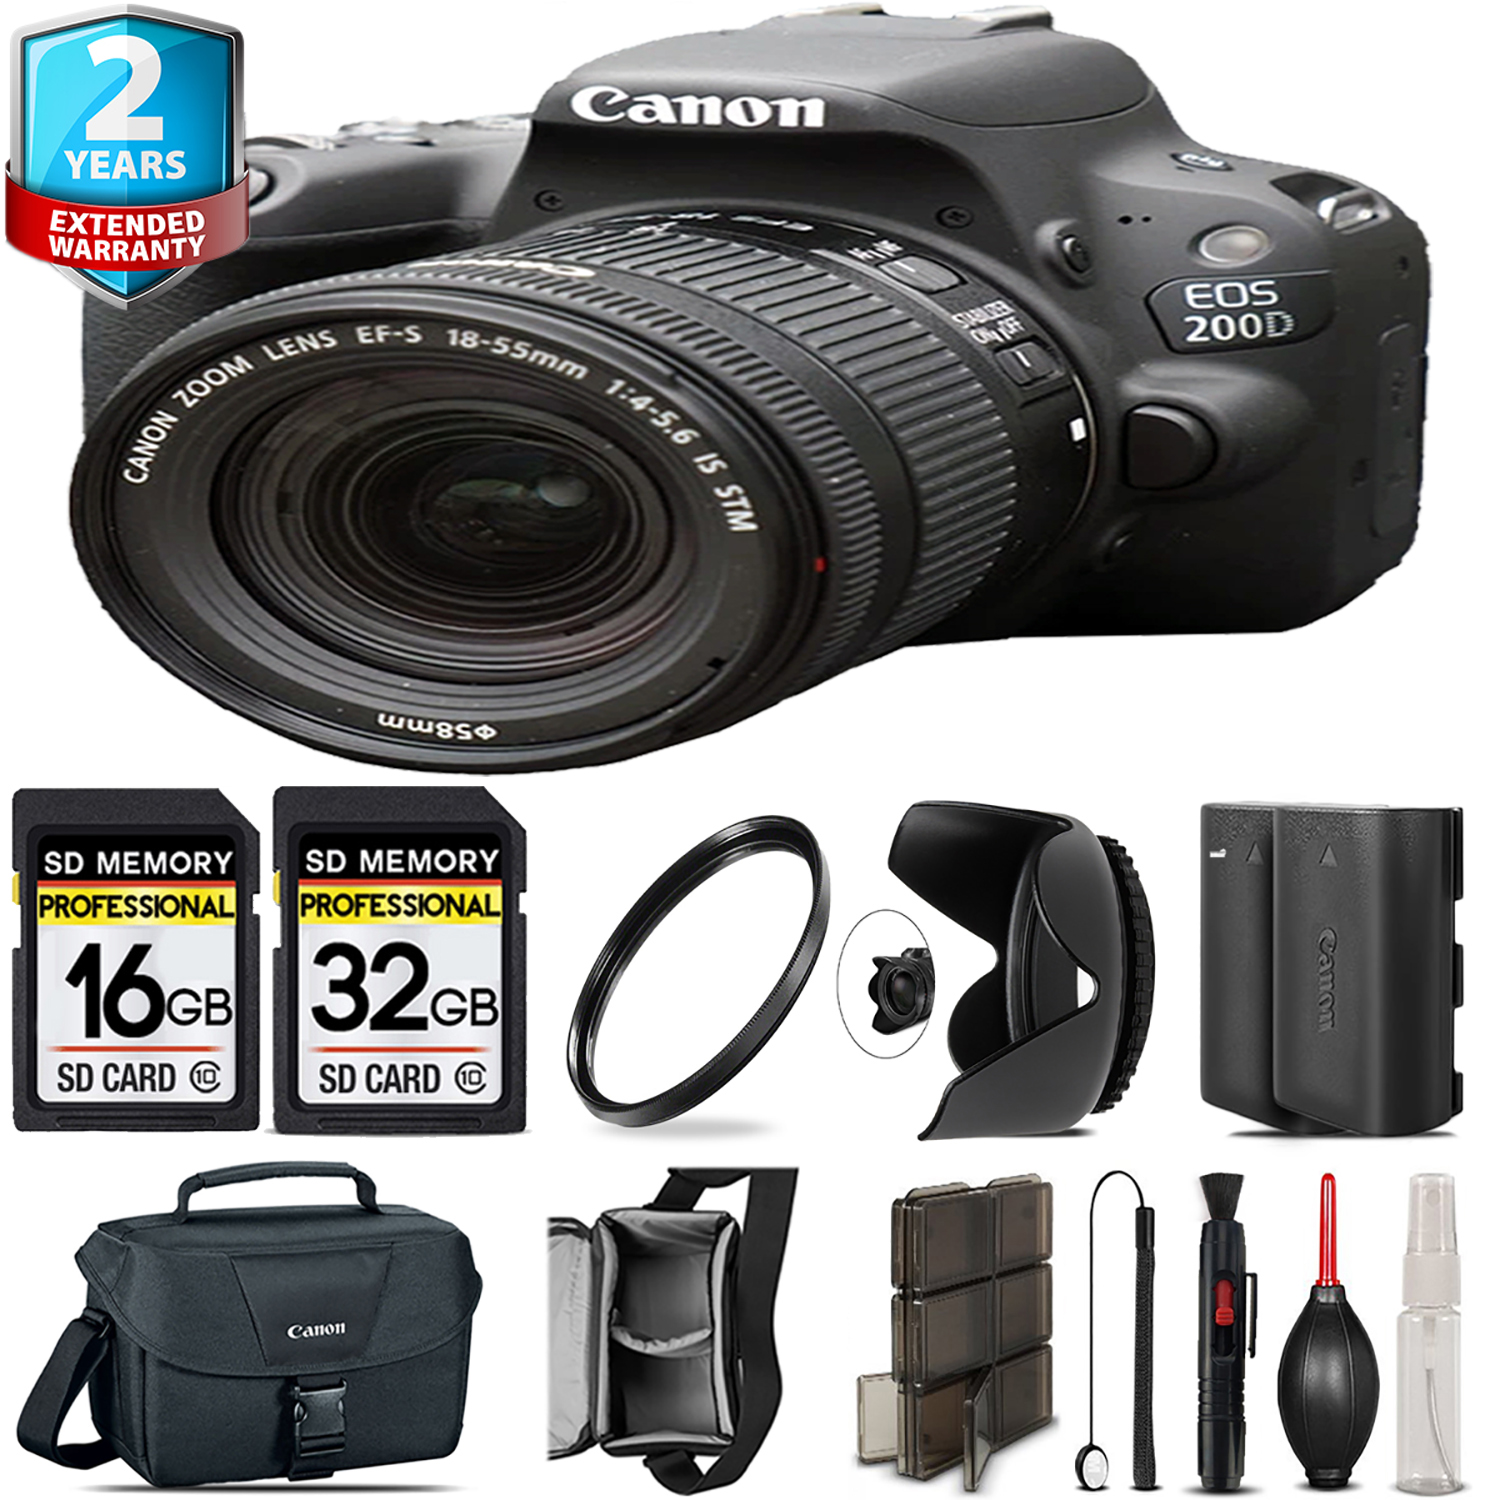 EOS Rebel 200D Camera (Black) + 18-55mm IS STM + Tulip Hood + - 48GB Kit *FREE SHIPPING*